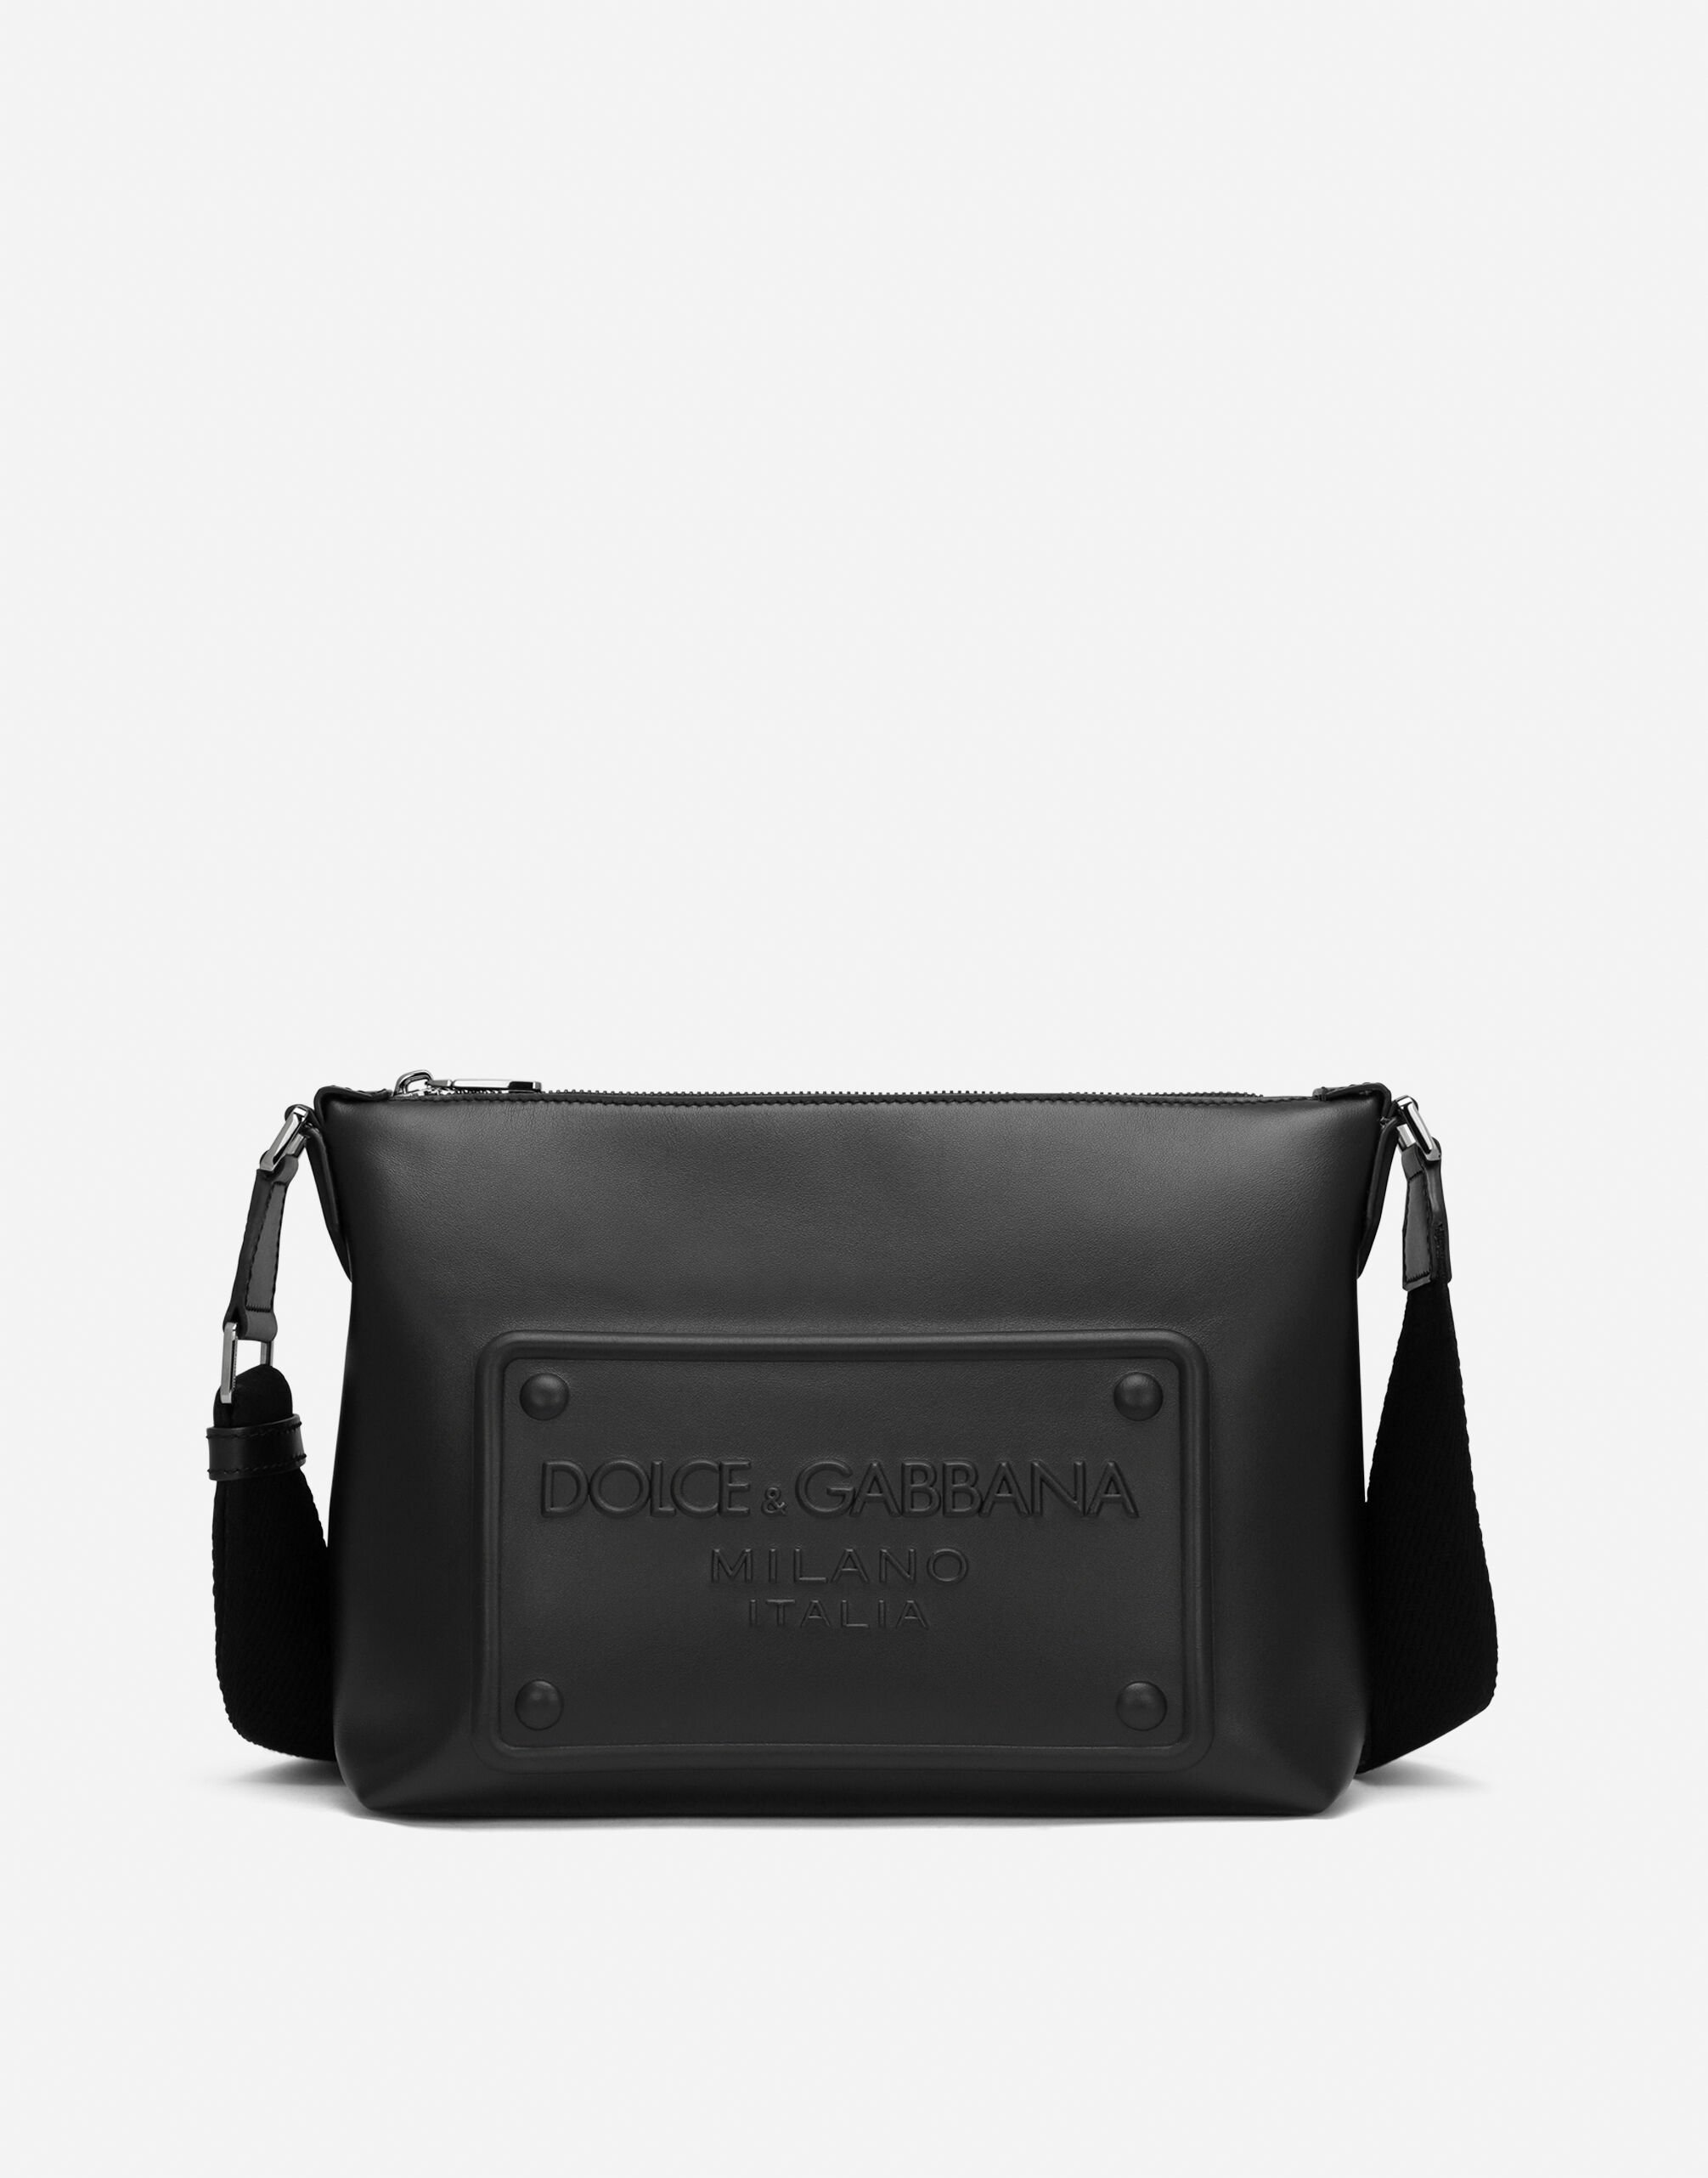 Dolce & Gabbana 양각 로고 디테일 카프스킨 크로스보디백 브라운 BM3004A1275